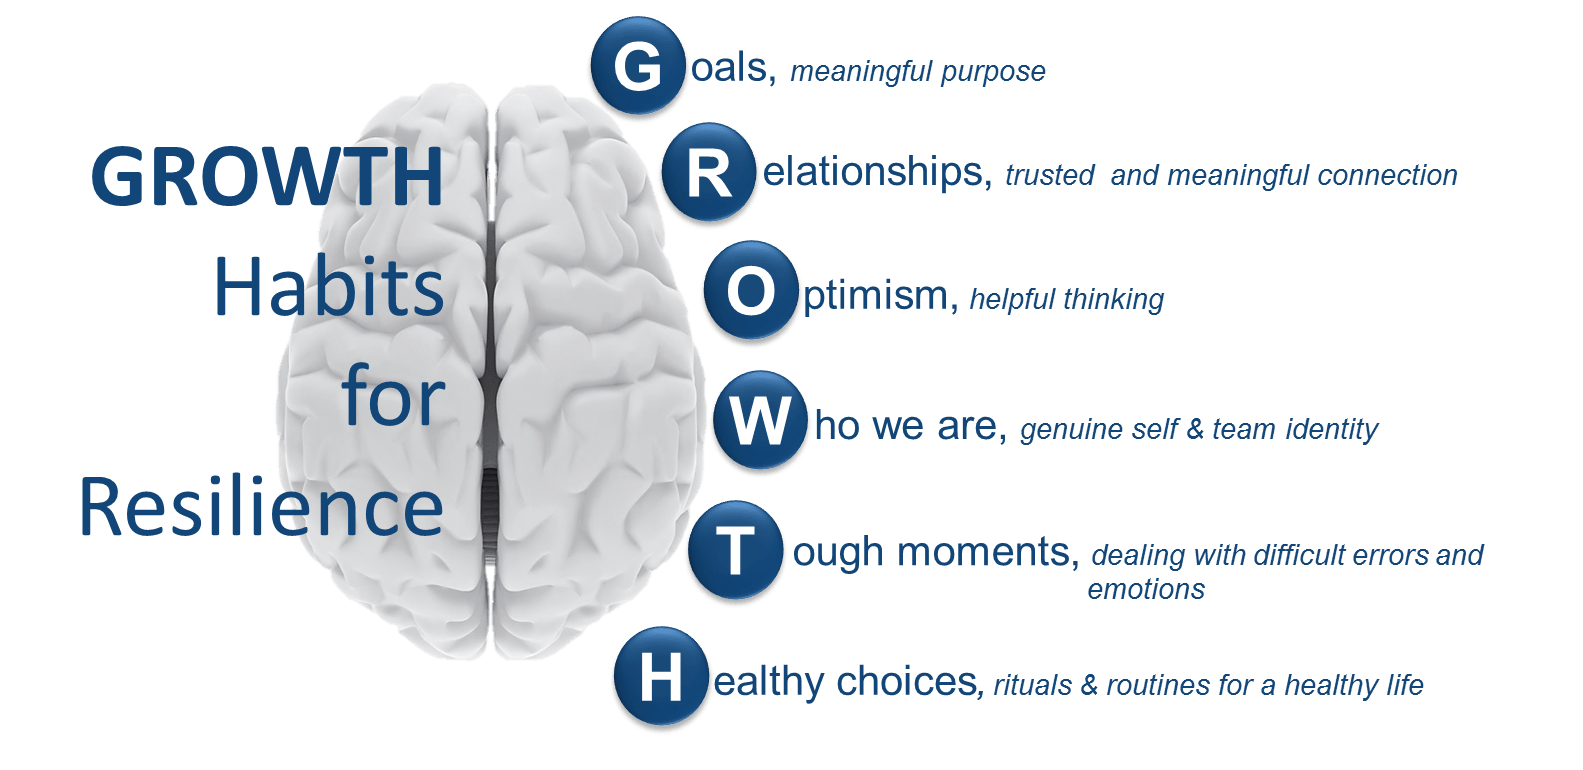 GROWTH Habits Model